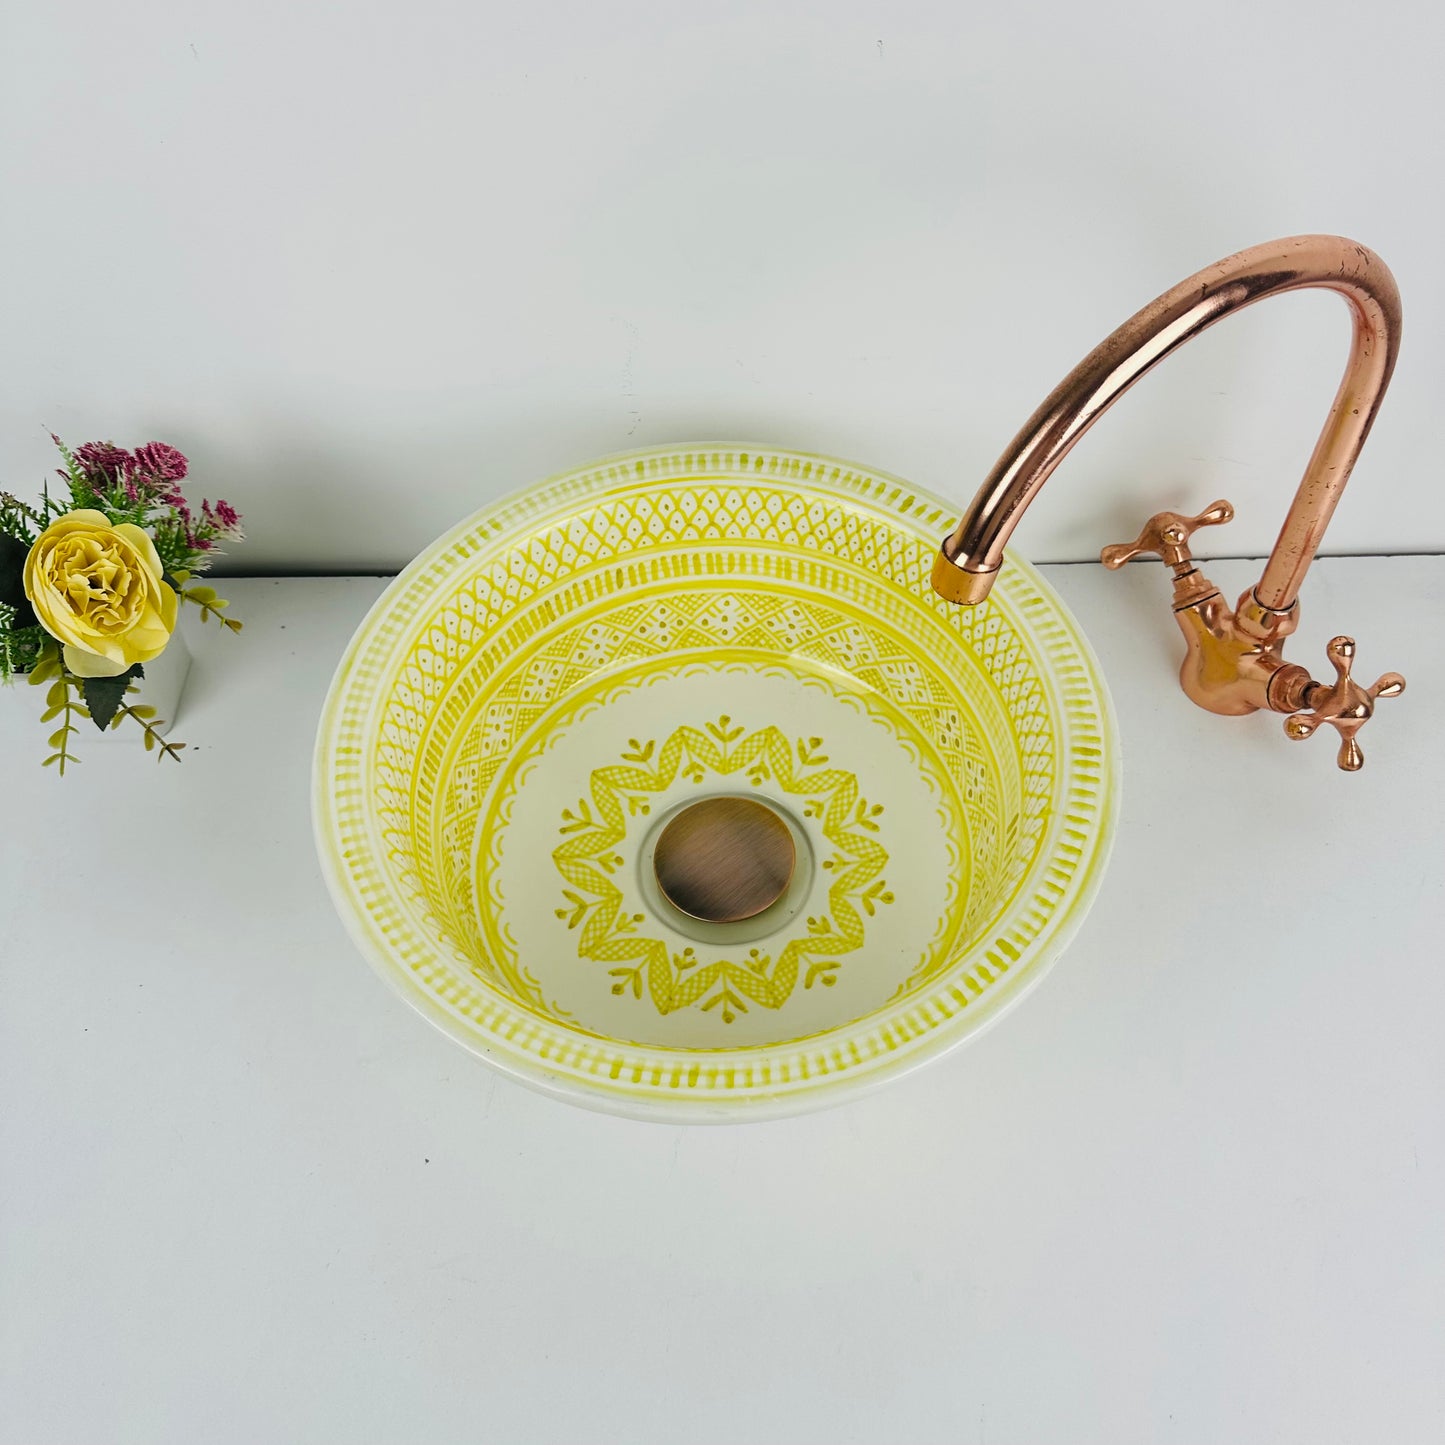 Lemon Zest: Handcrafted Ceramic Sink in Bright Lemon yellow